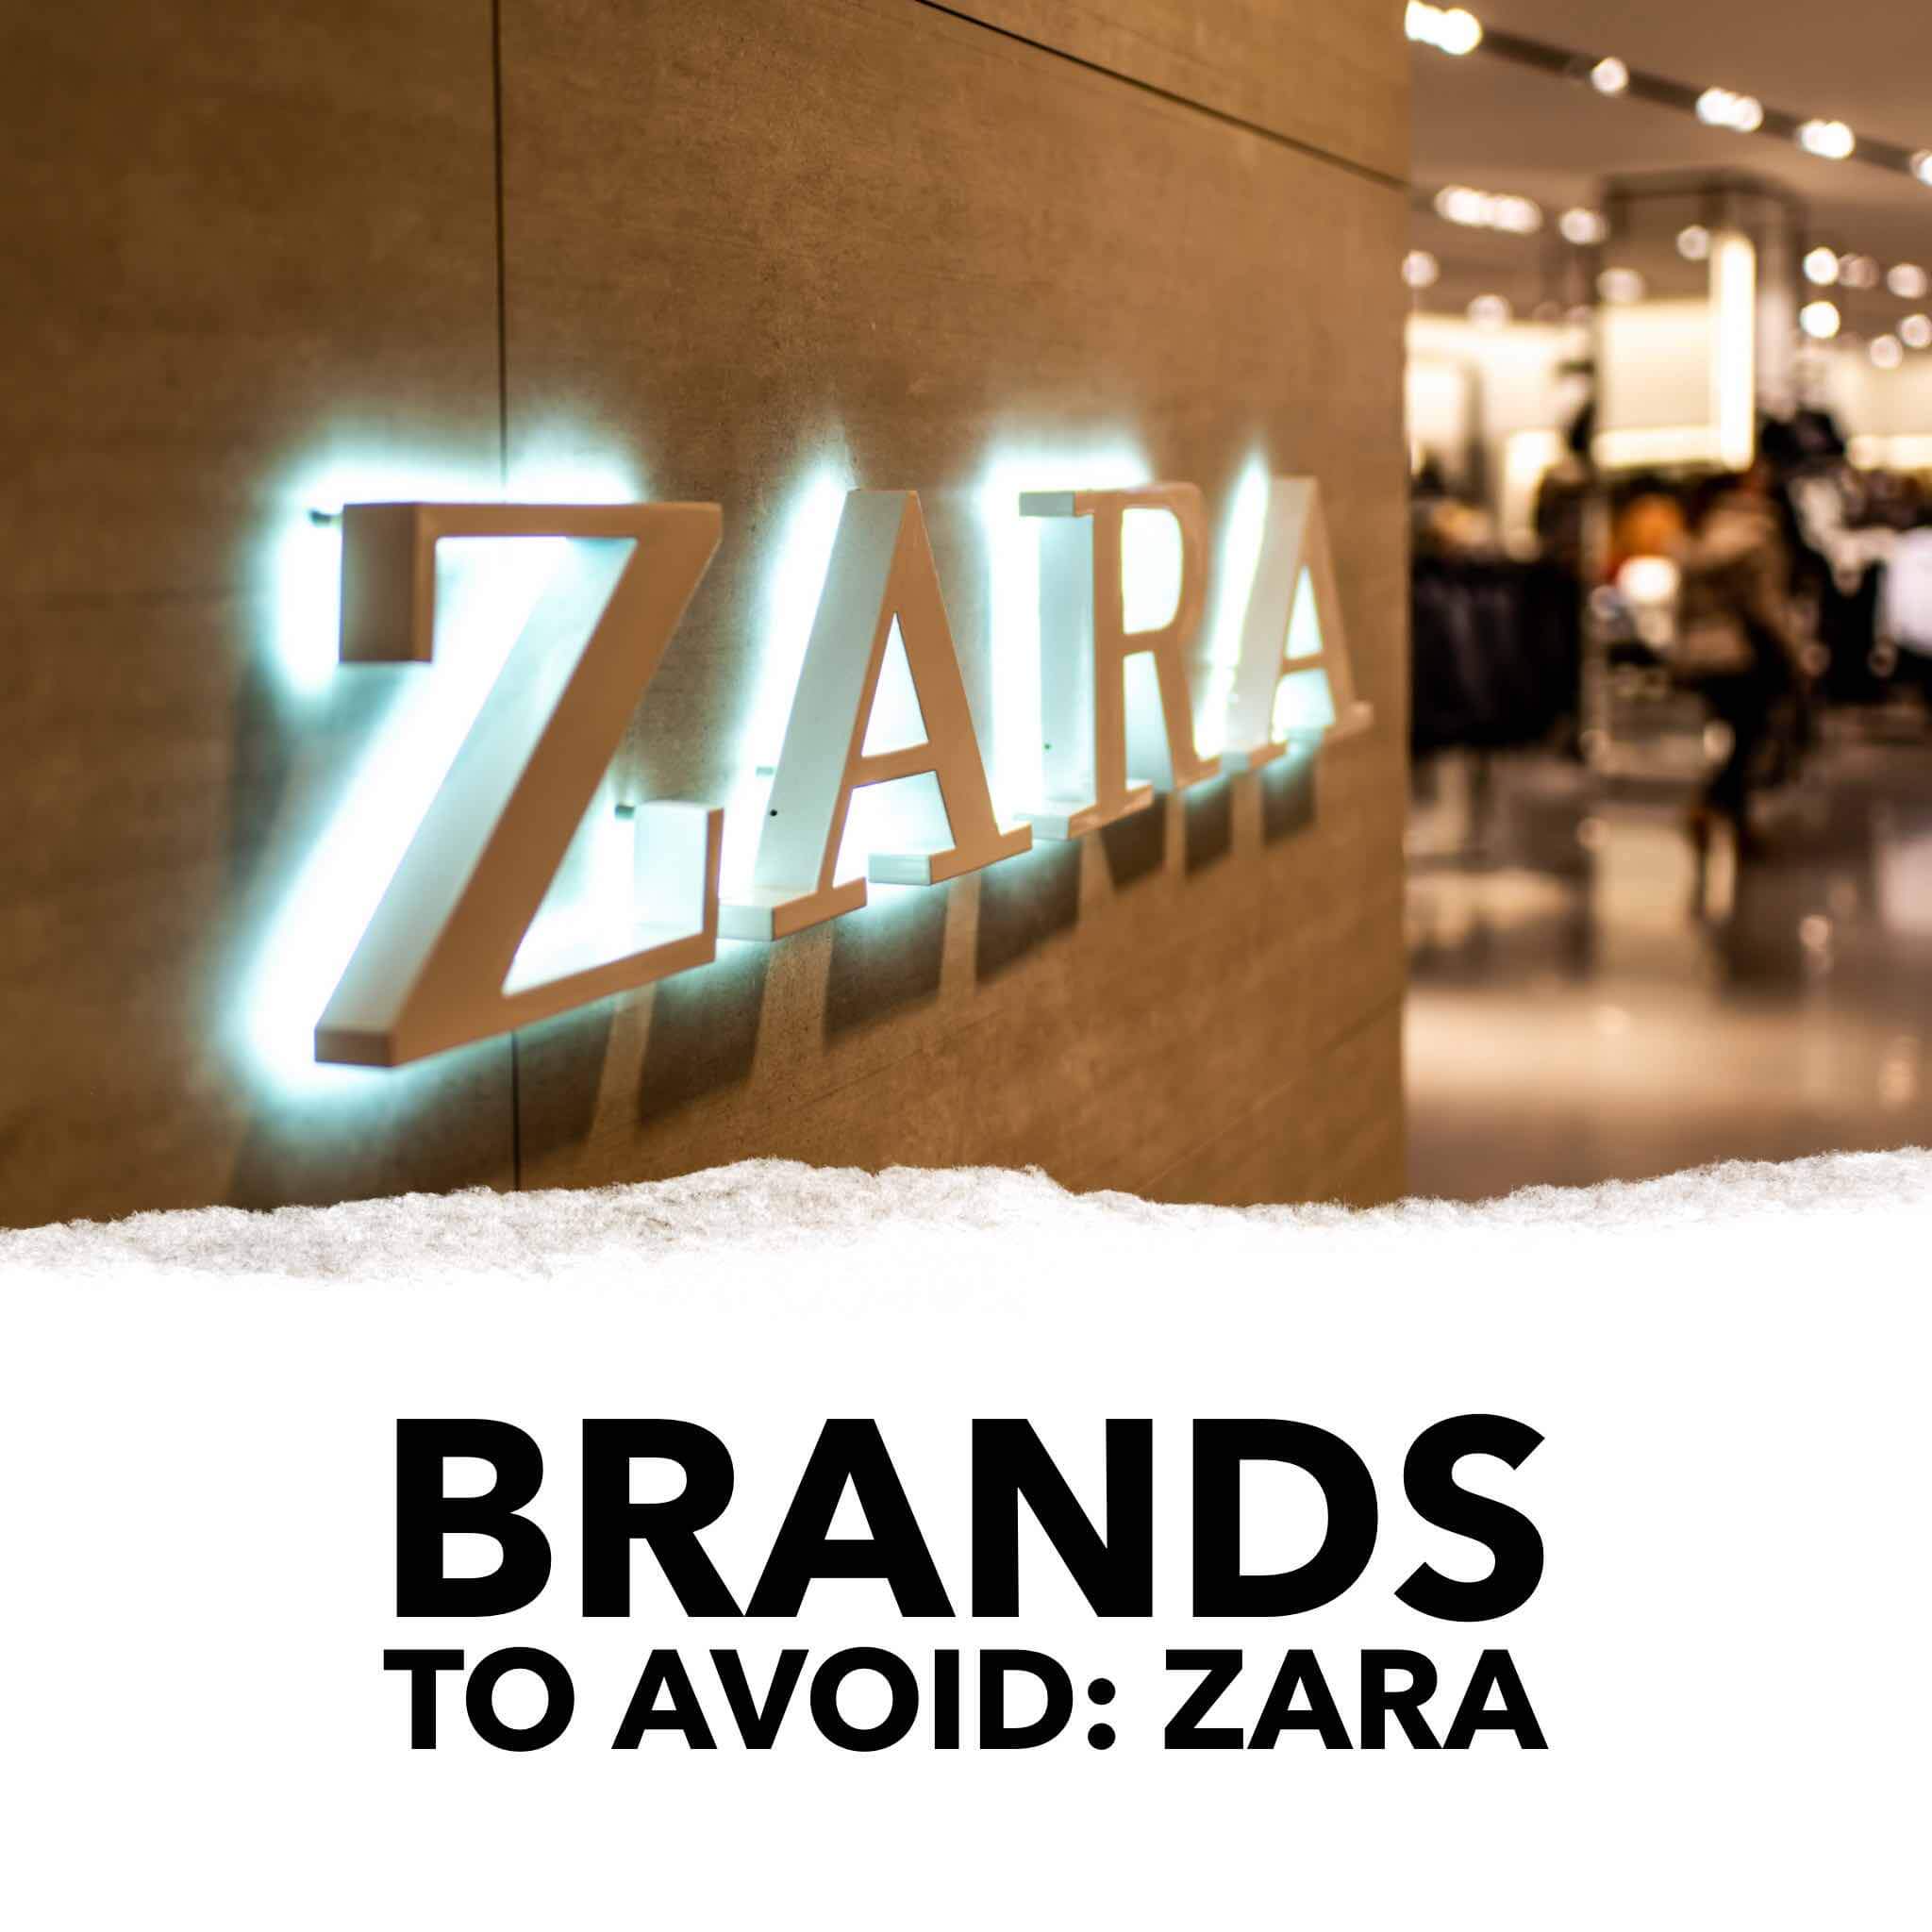 https://eztivn6wptm.exactdn.com/wp-content/uploads/2020/08/Brands-to-Avoid-Zara-.jpg?strip=all&lossy=1&ssl=1